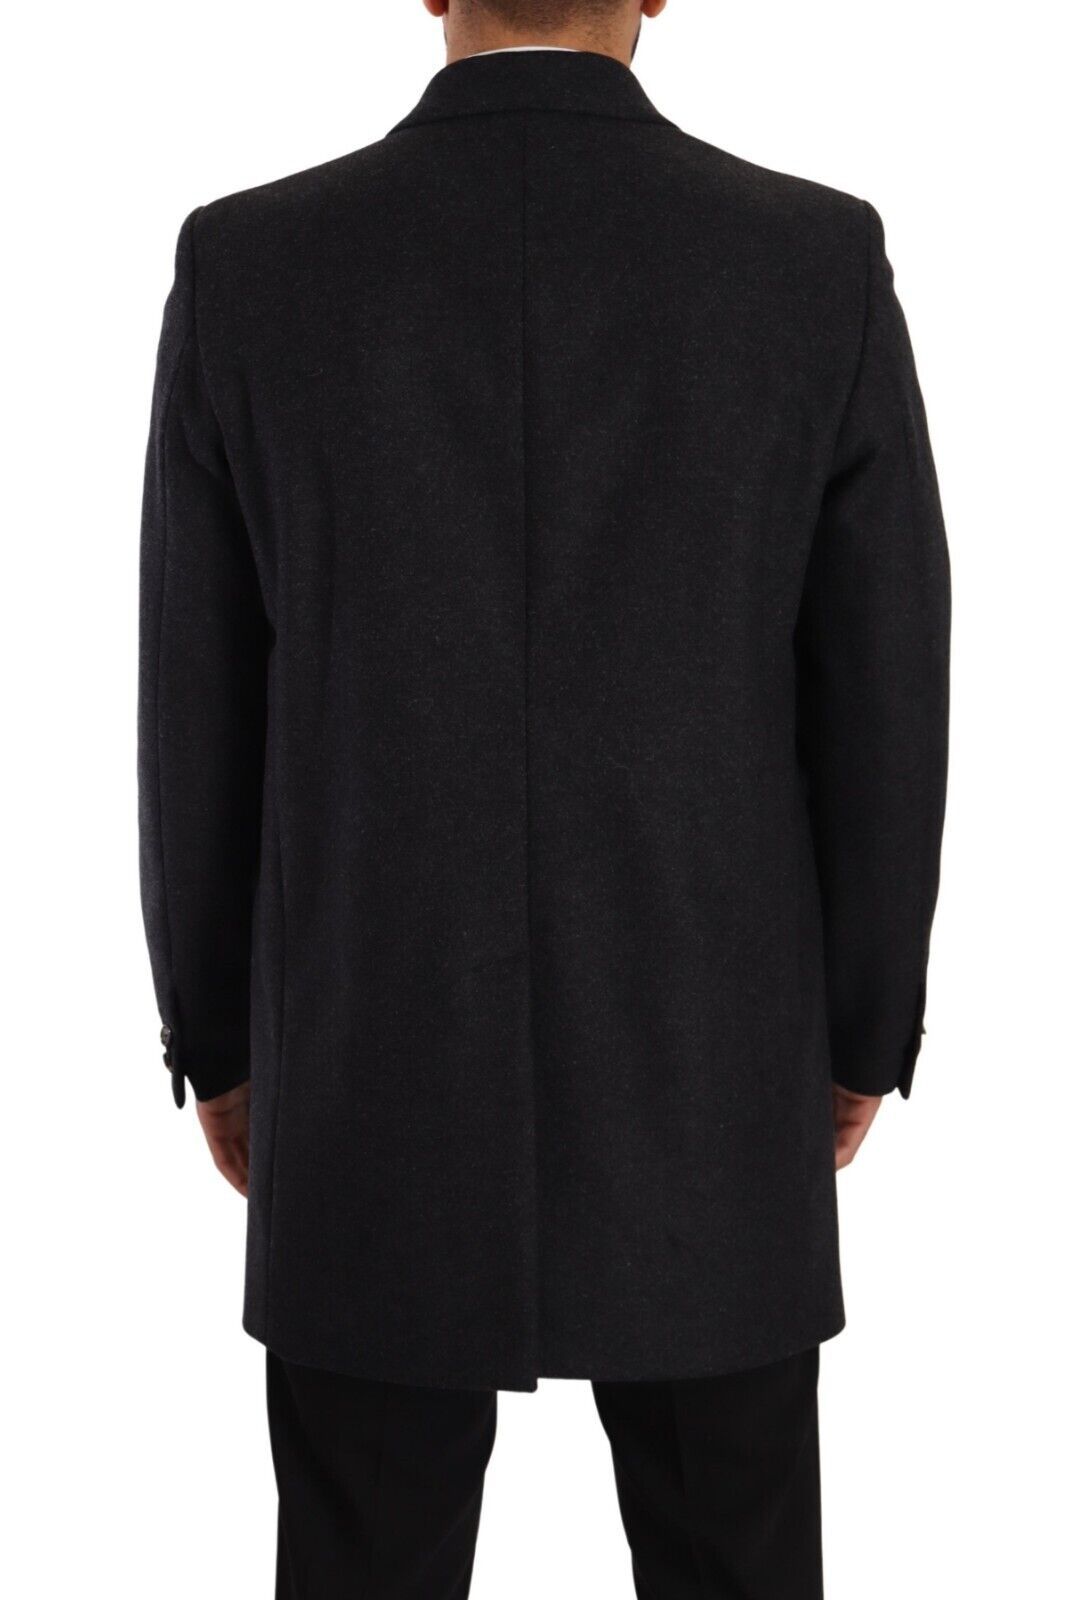 Dolce & Gabbana Dark Gray Wool Over Trench Coat Men Jacket